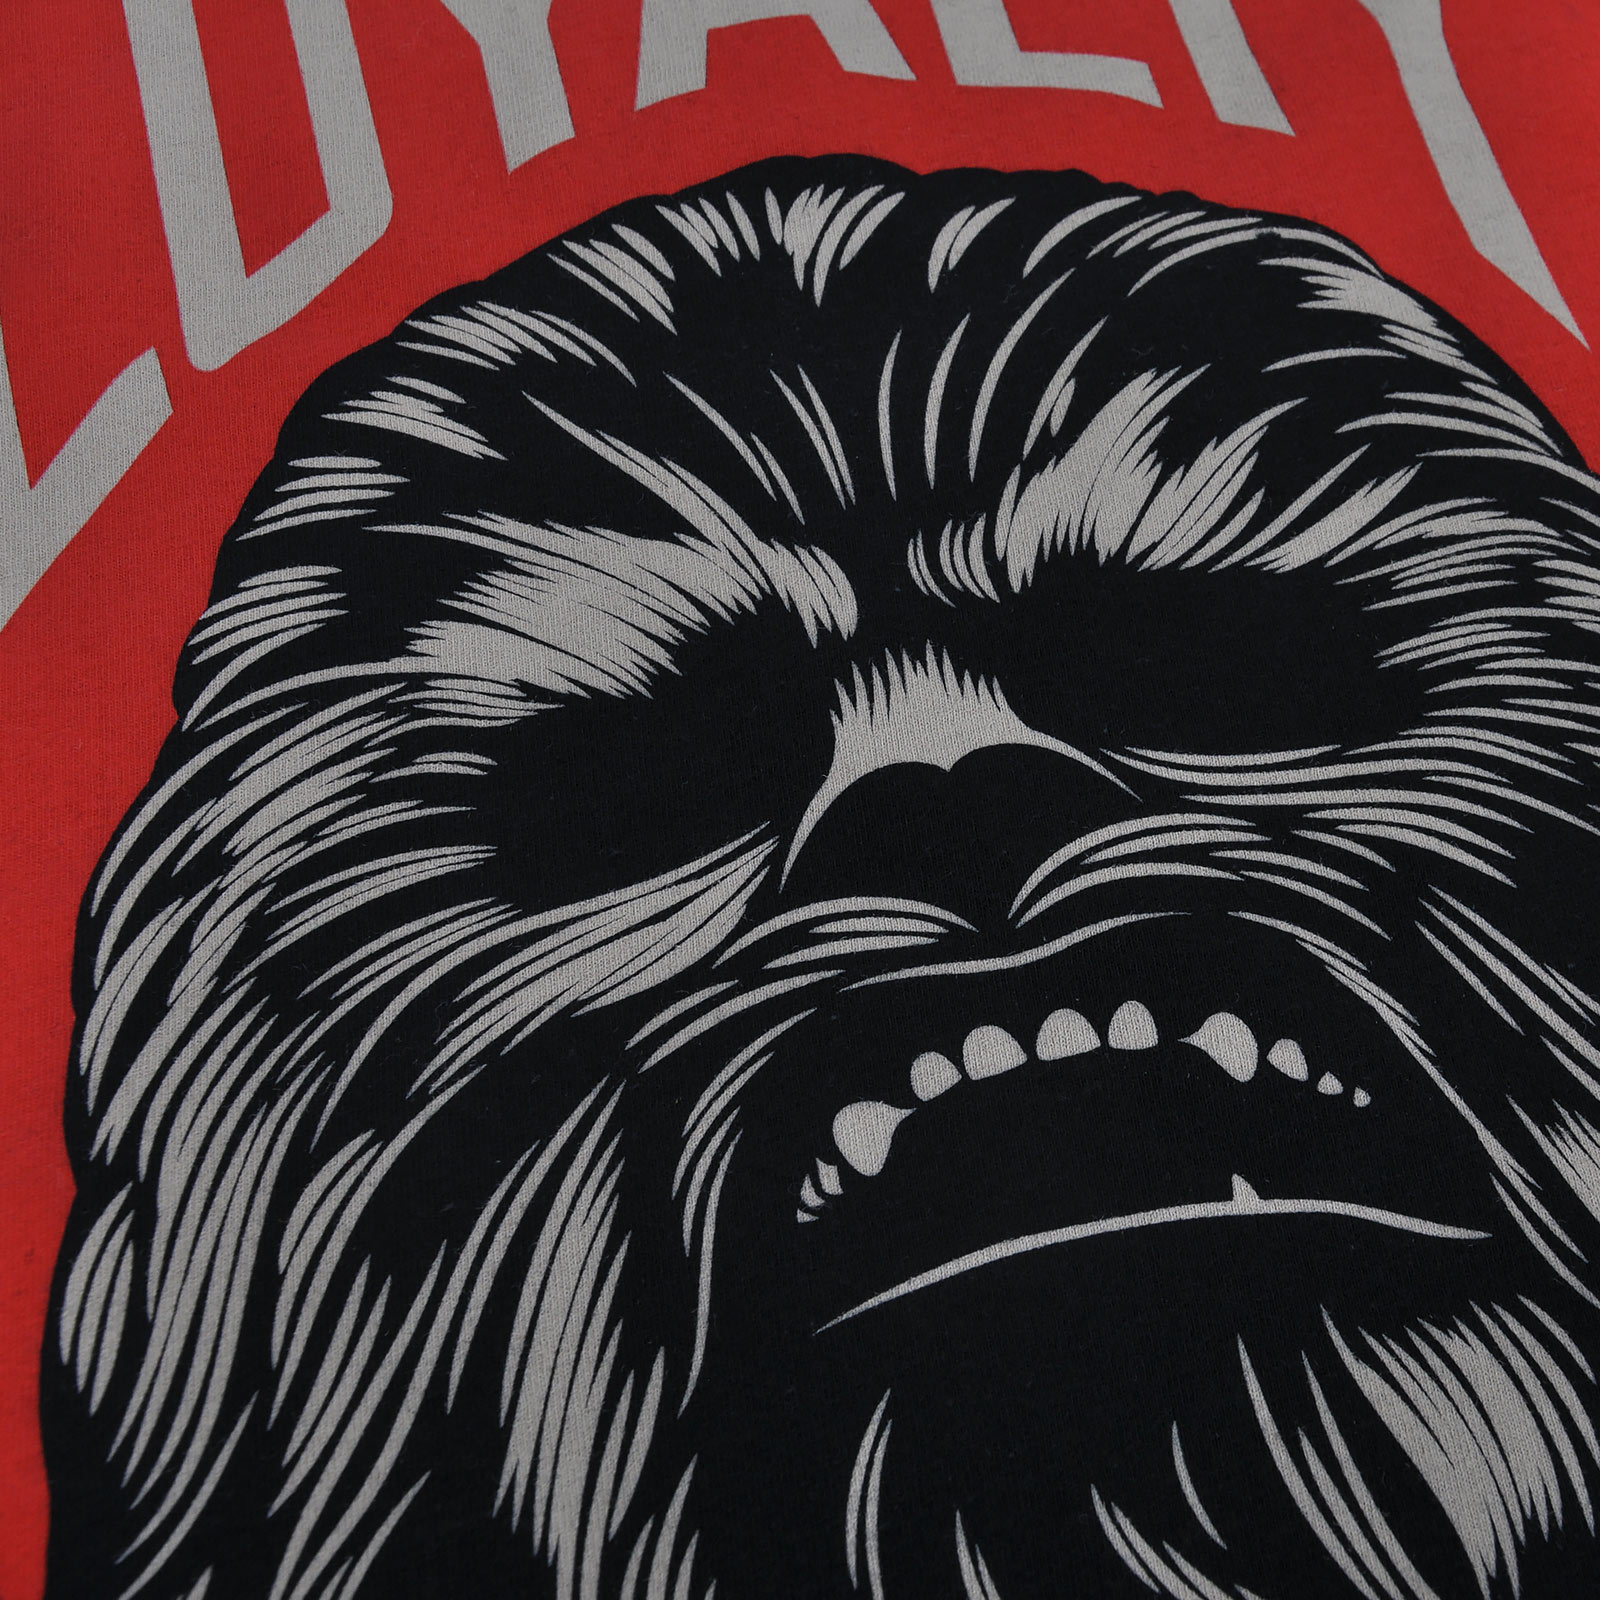 Star Wars - Chewbacca Loyalty T-Shirt schwarz